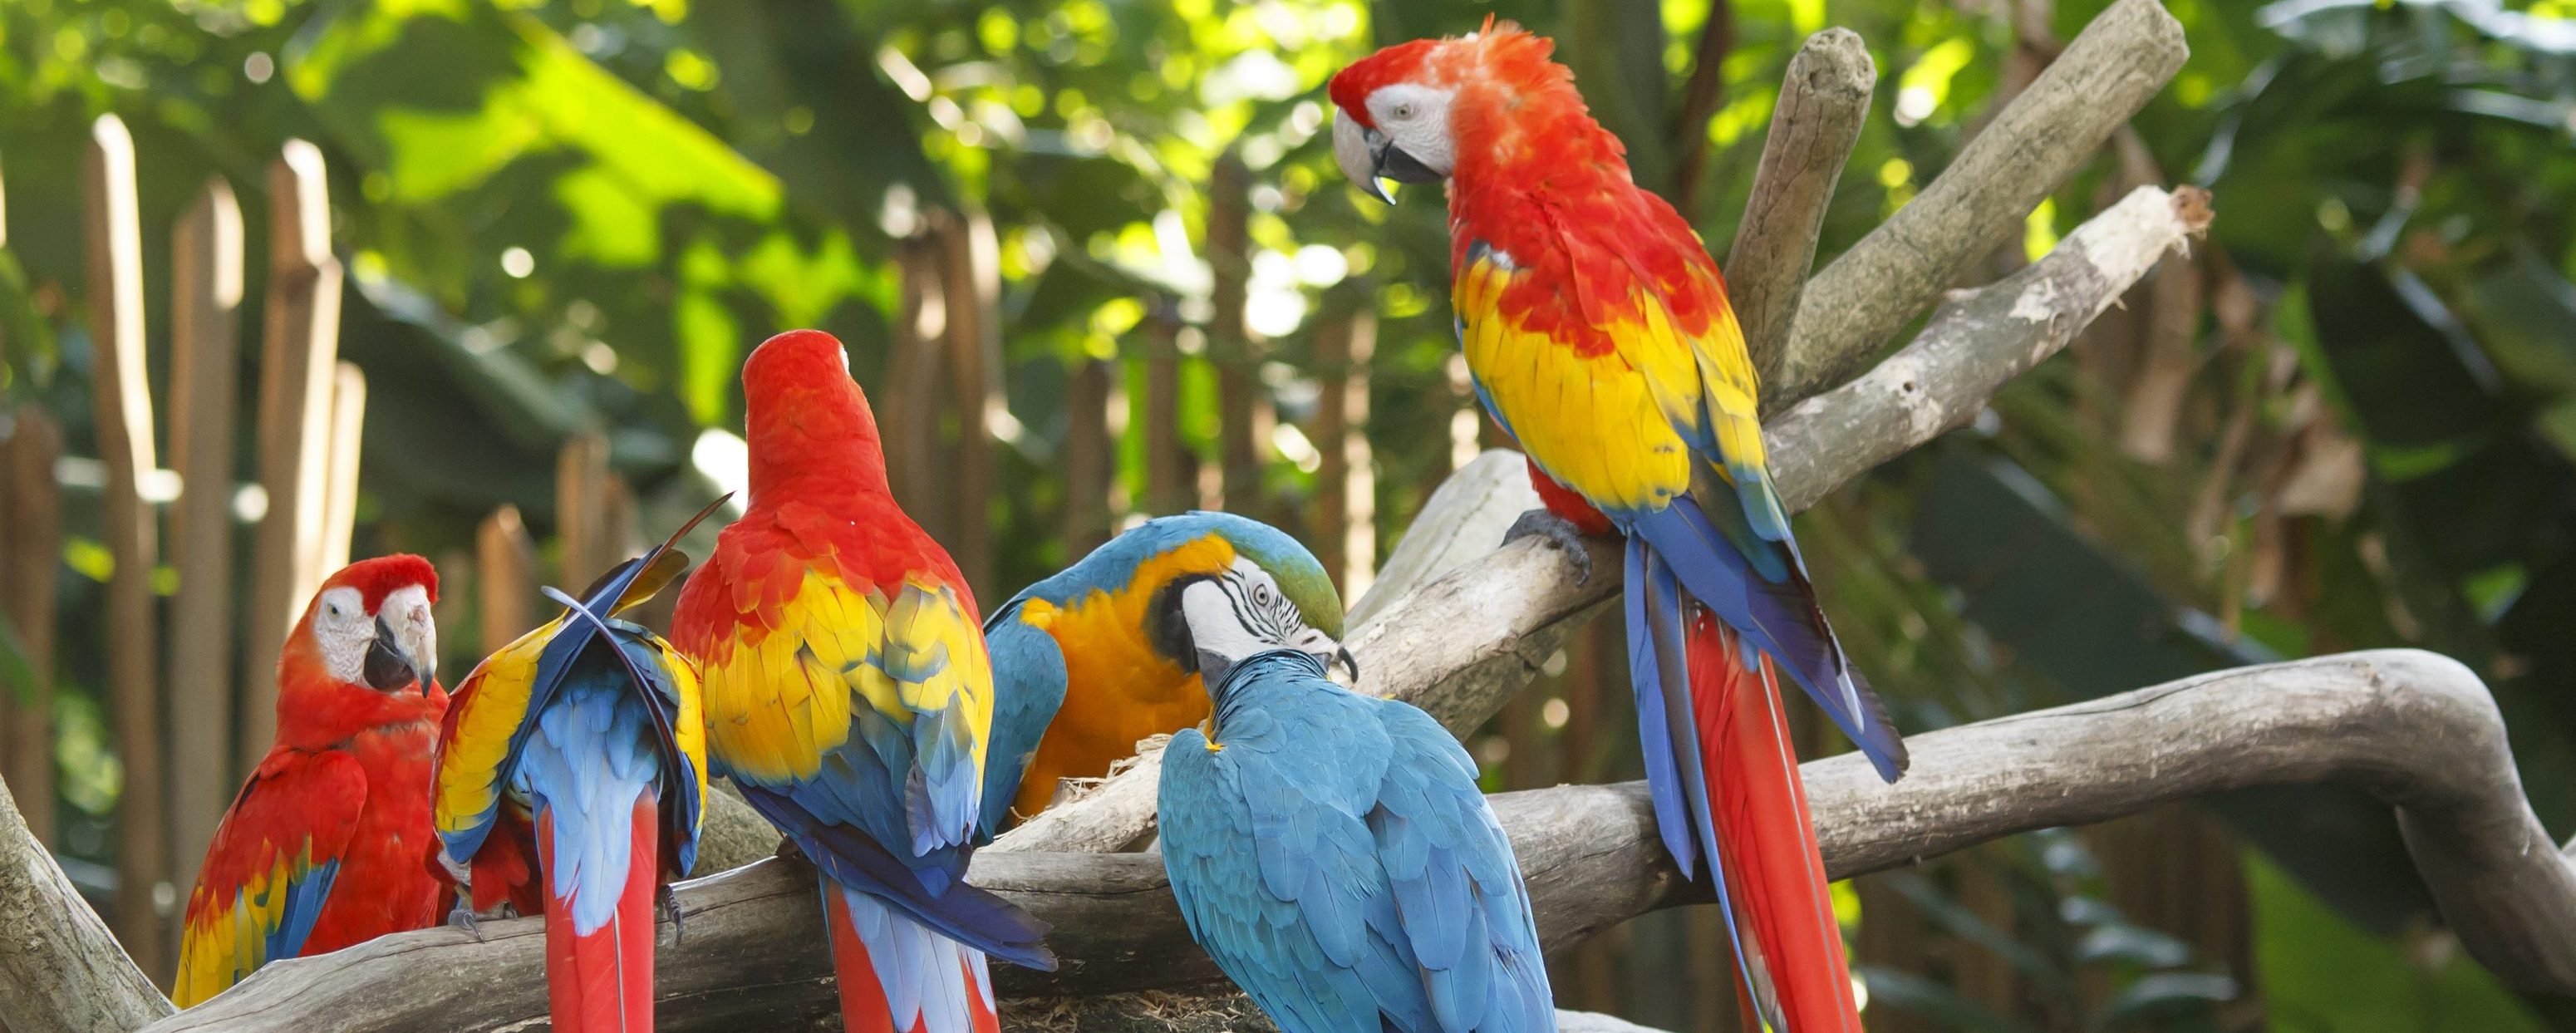 A few macaws sitting on a branch in the bird santuary at Iguazu.